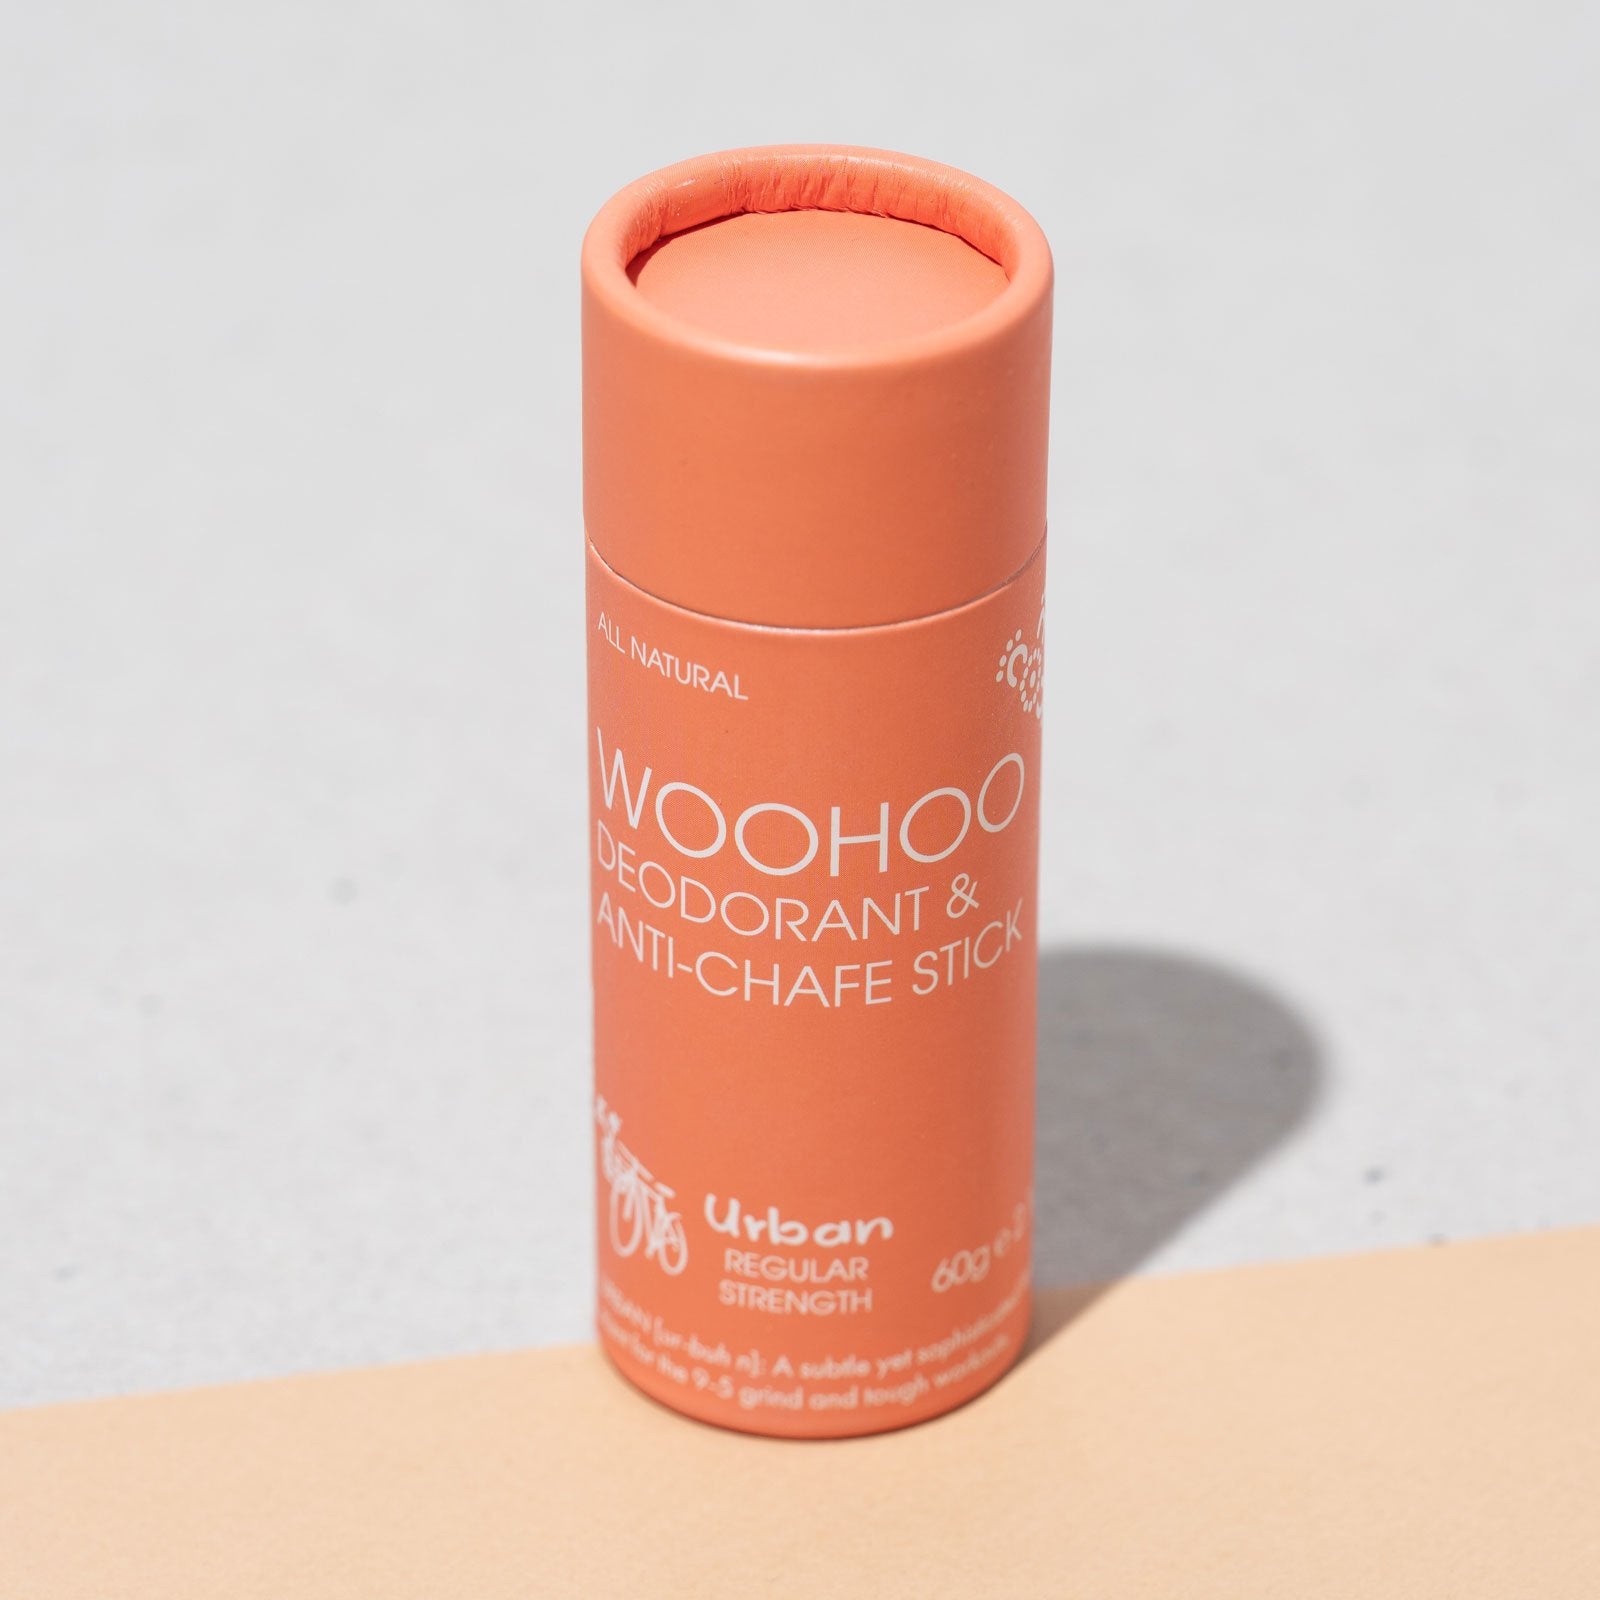 Woohoo Body Deodorant & Anti-Chafe Stick - Urban